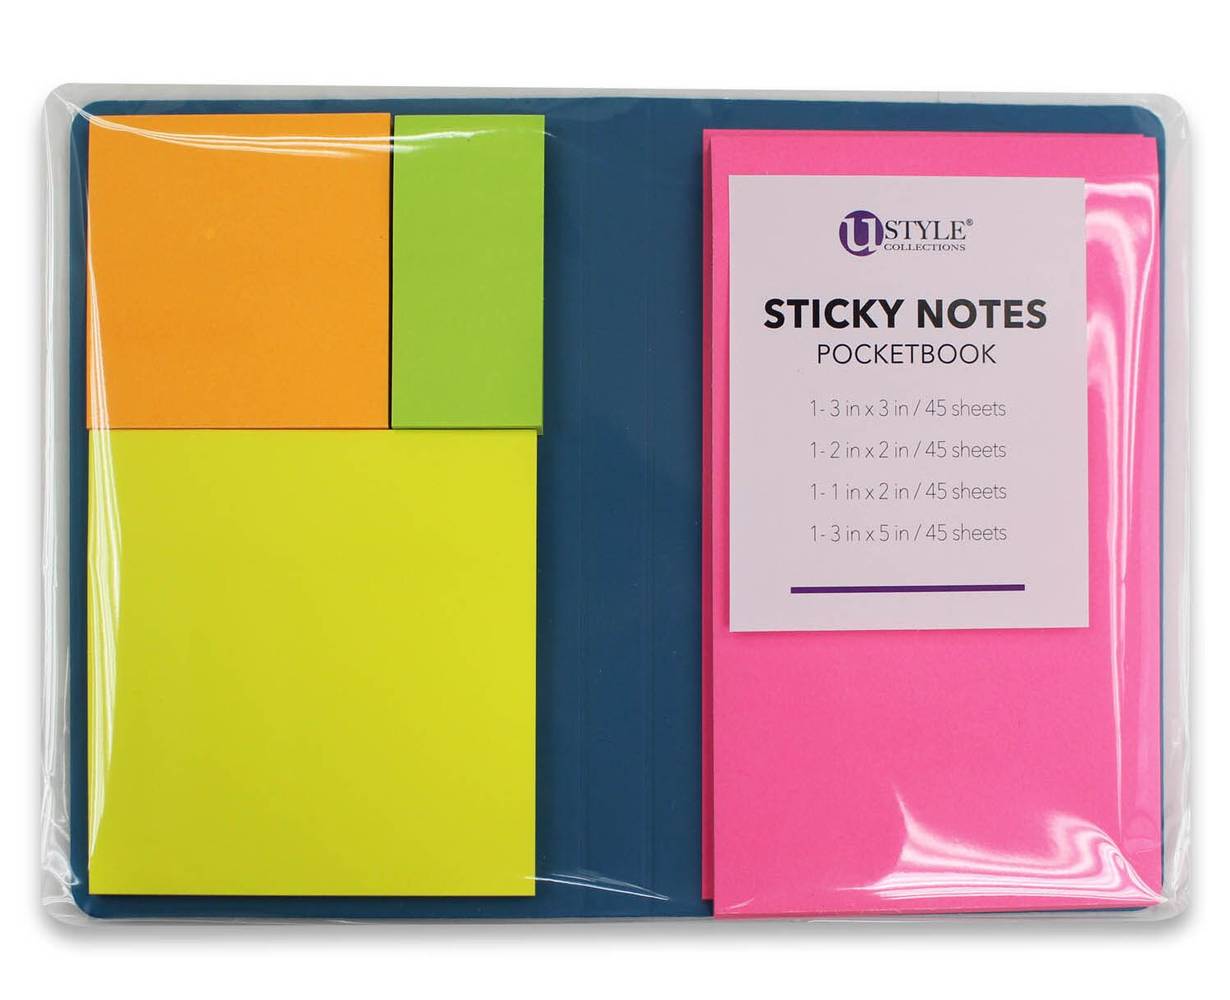 U Style Collections Sticky Notes Pocketbook